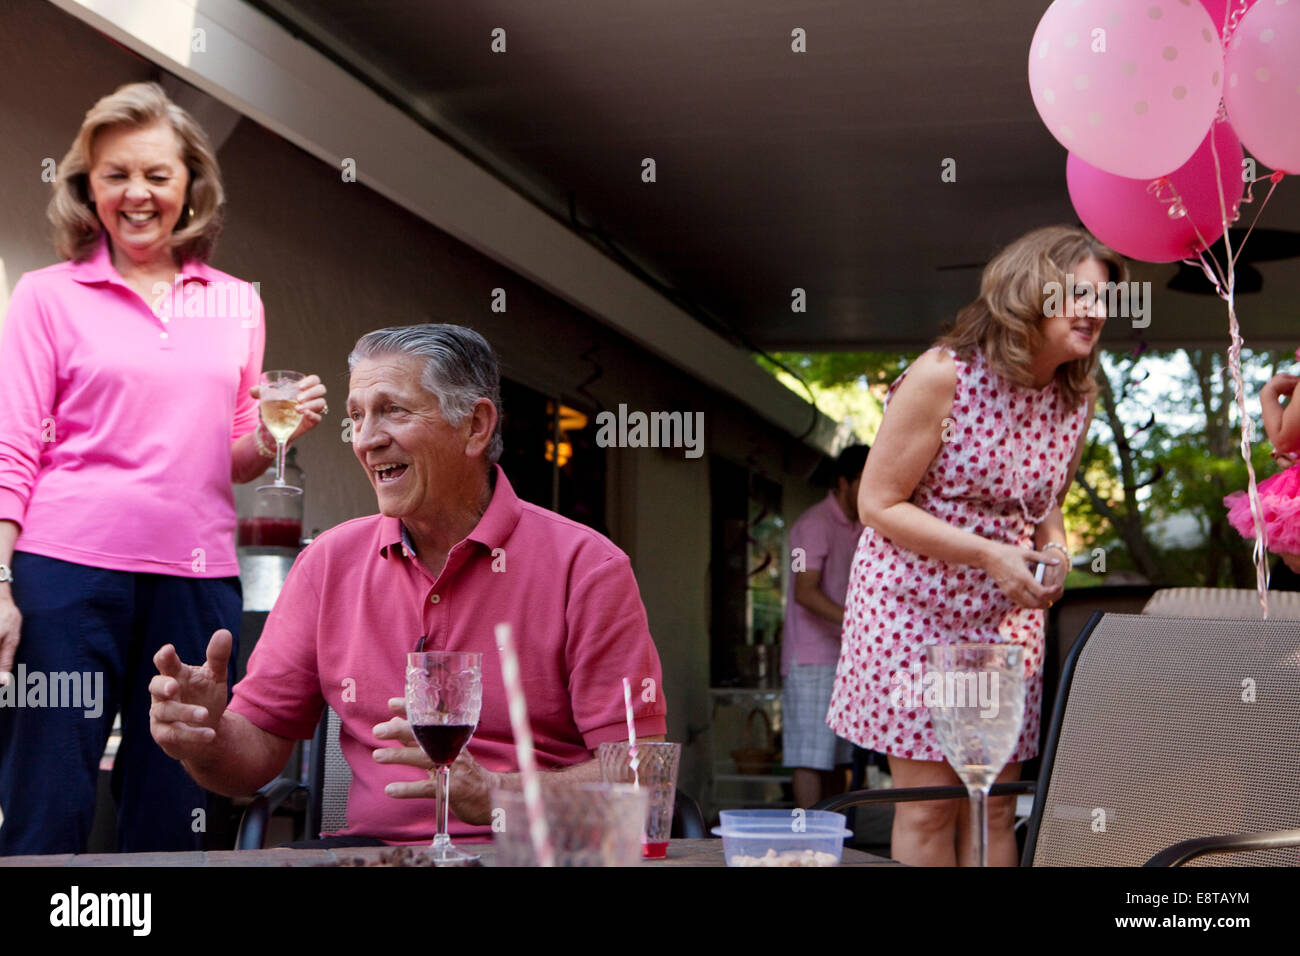 Caucasian family celebrating at party Stock Photo